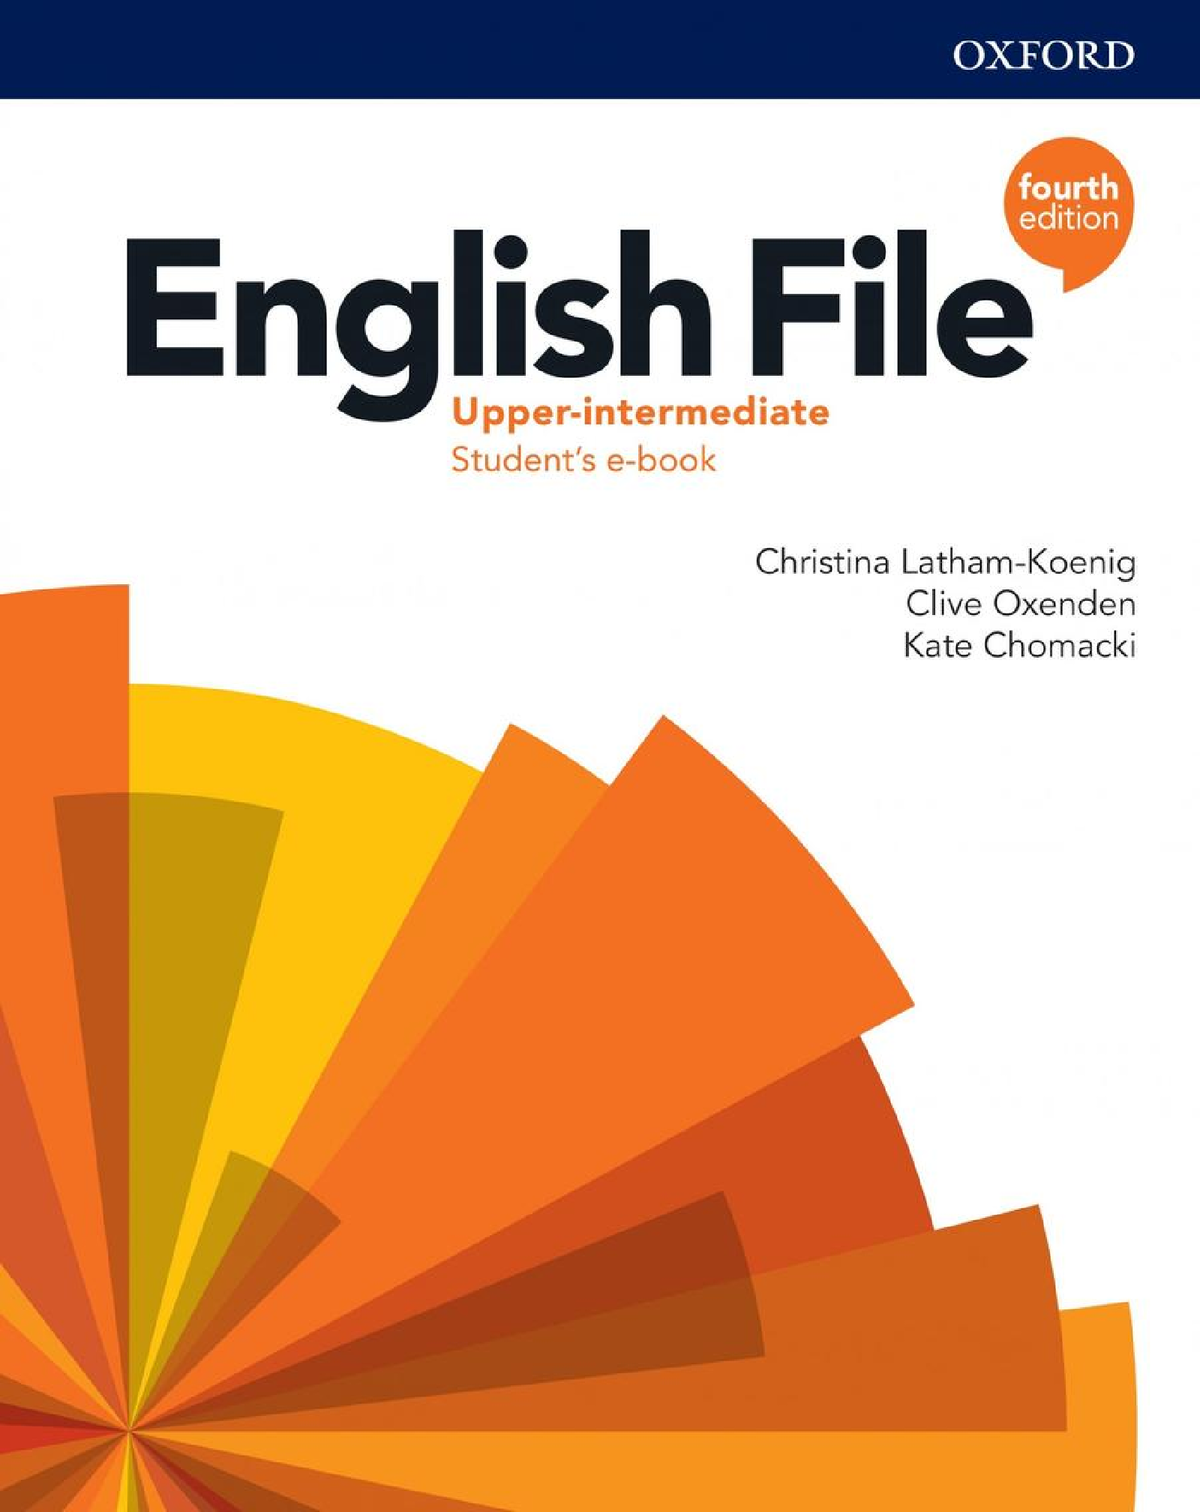 Pdfcoffee - English file 4th edition students book - ENG 301 - Studocu